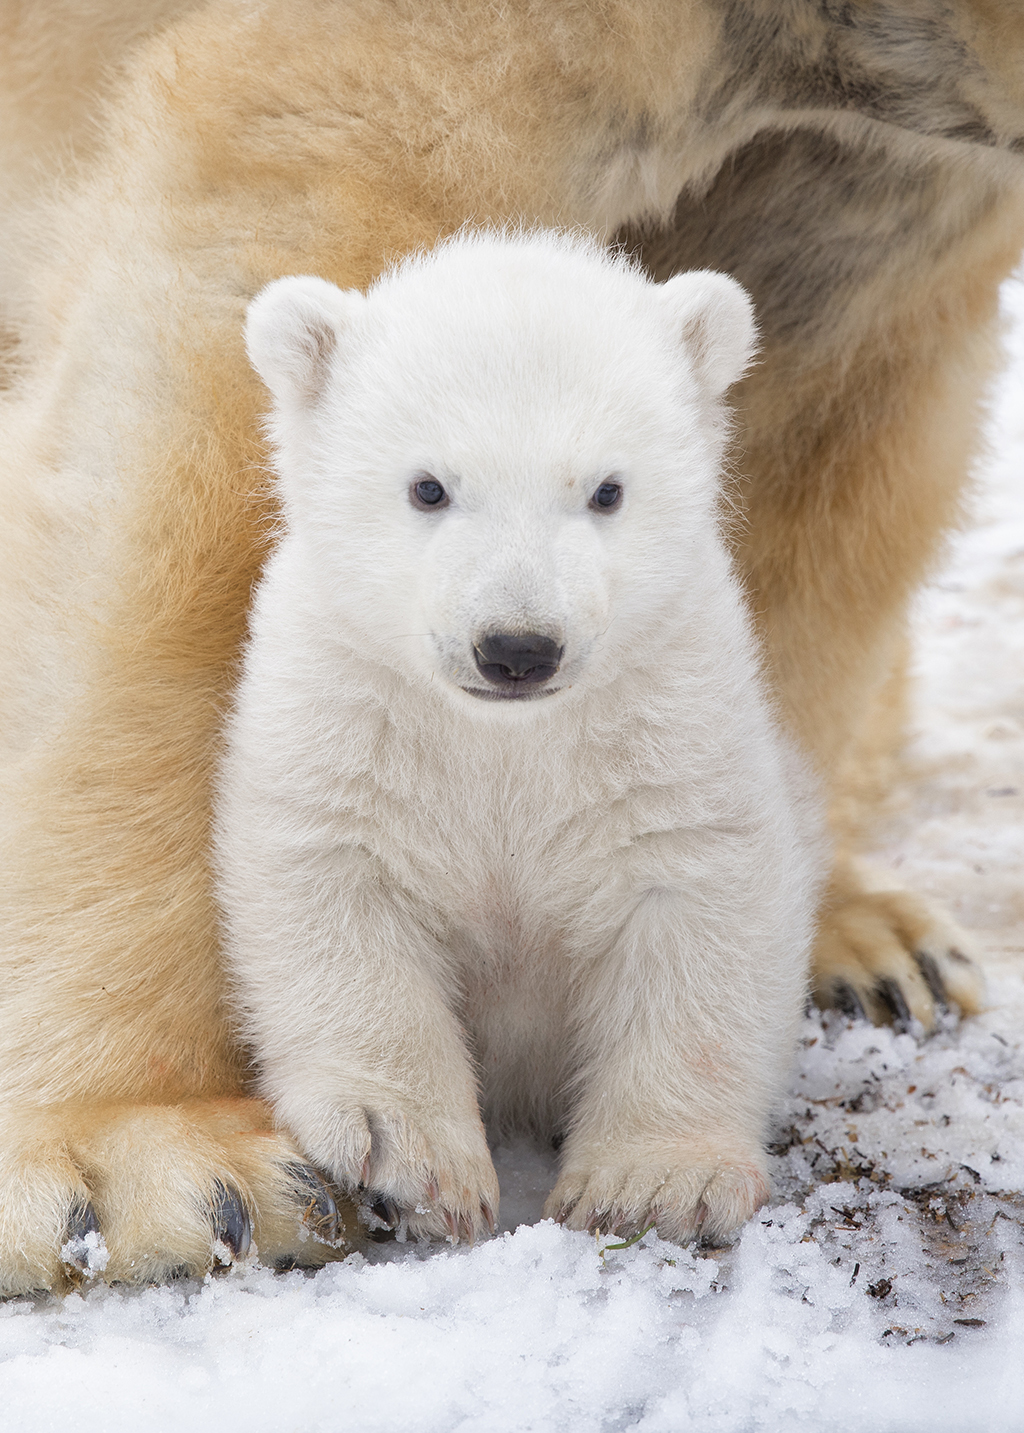 The polar bear cub was born in December